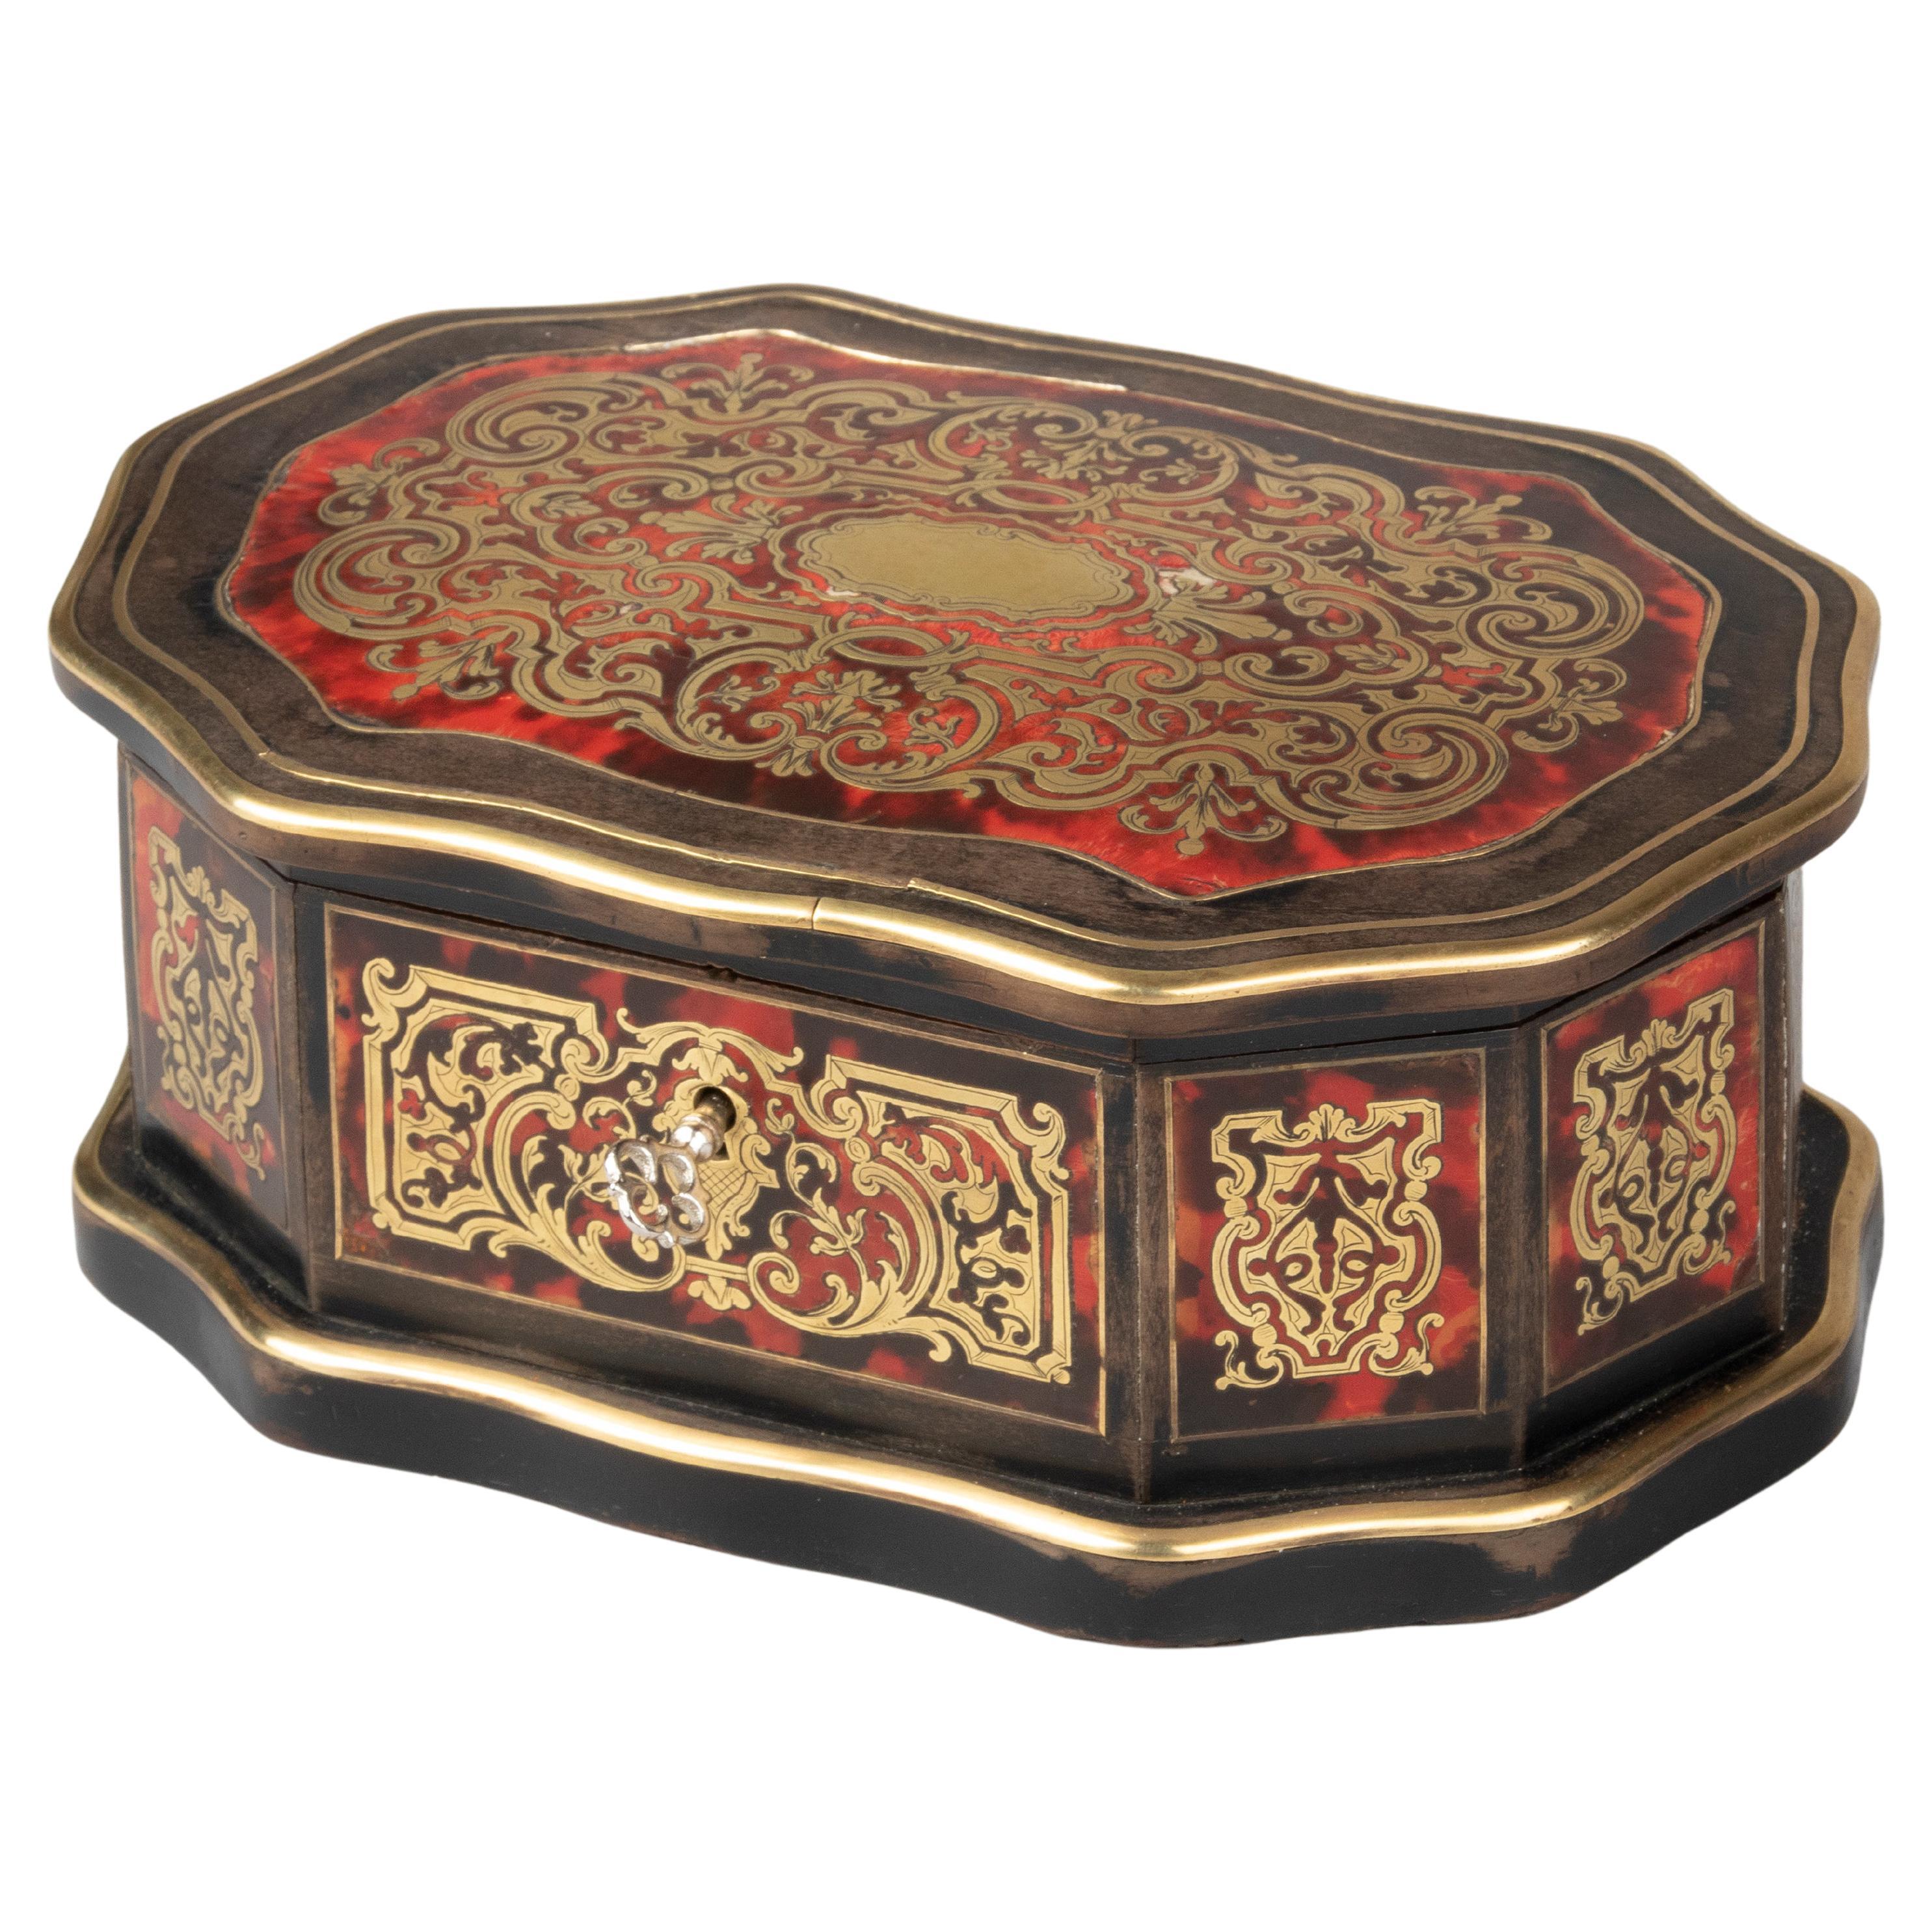 19th Century Napoleon III Boulle Marquetry Box